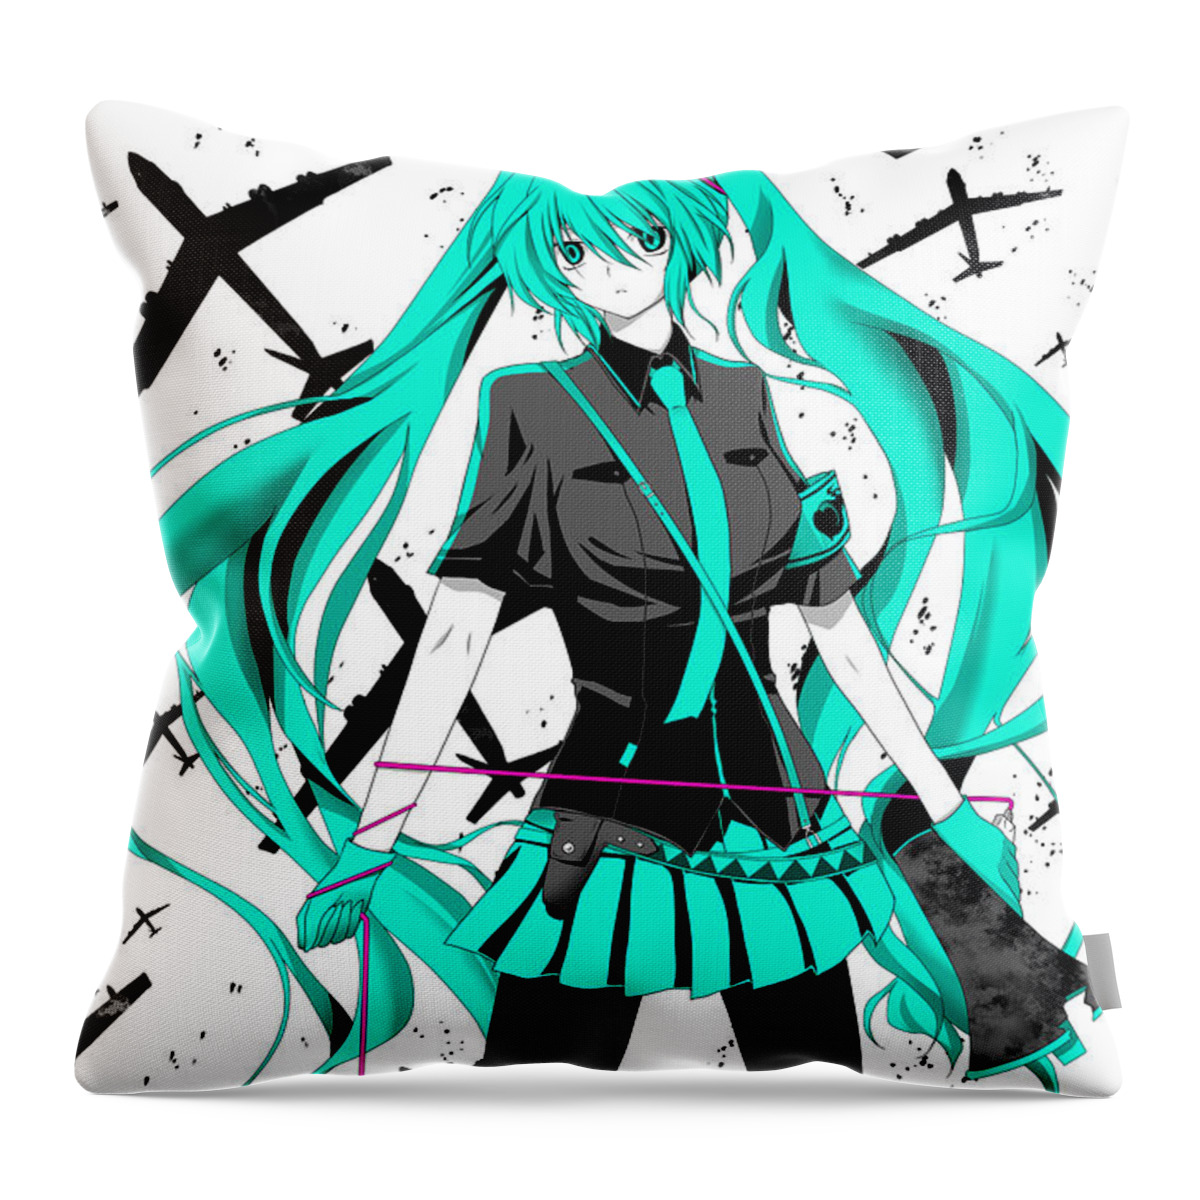 Vocaloid Throw Pillow featuring the digital art Vocaloid #84 by Super Lovely